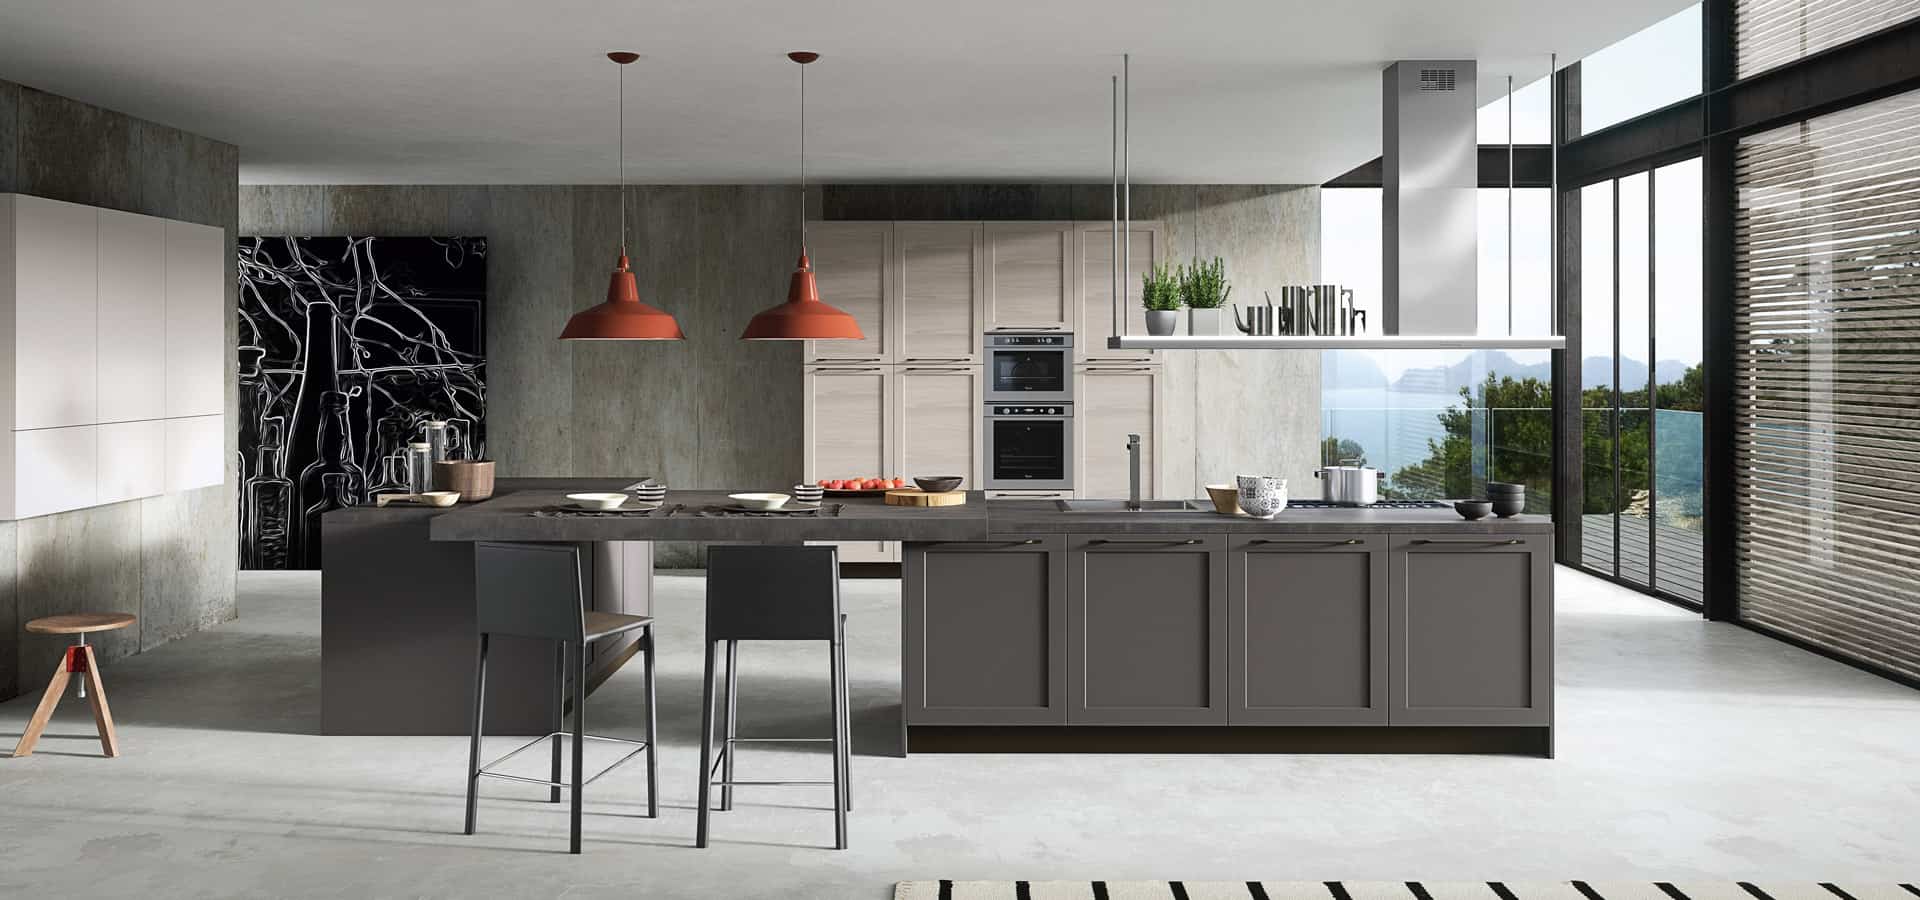 Modern Kitchen Design 2021 l 10 Amazing Ideas and Interior Styles